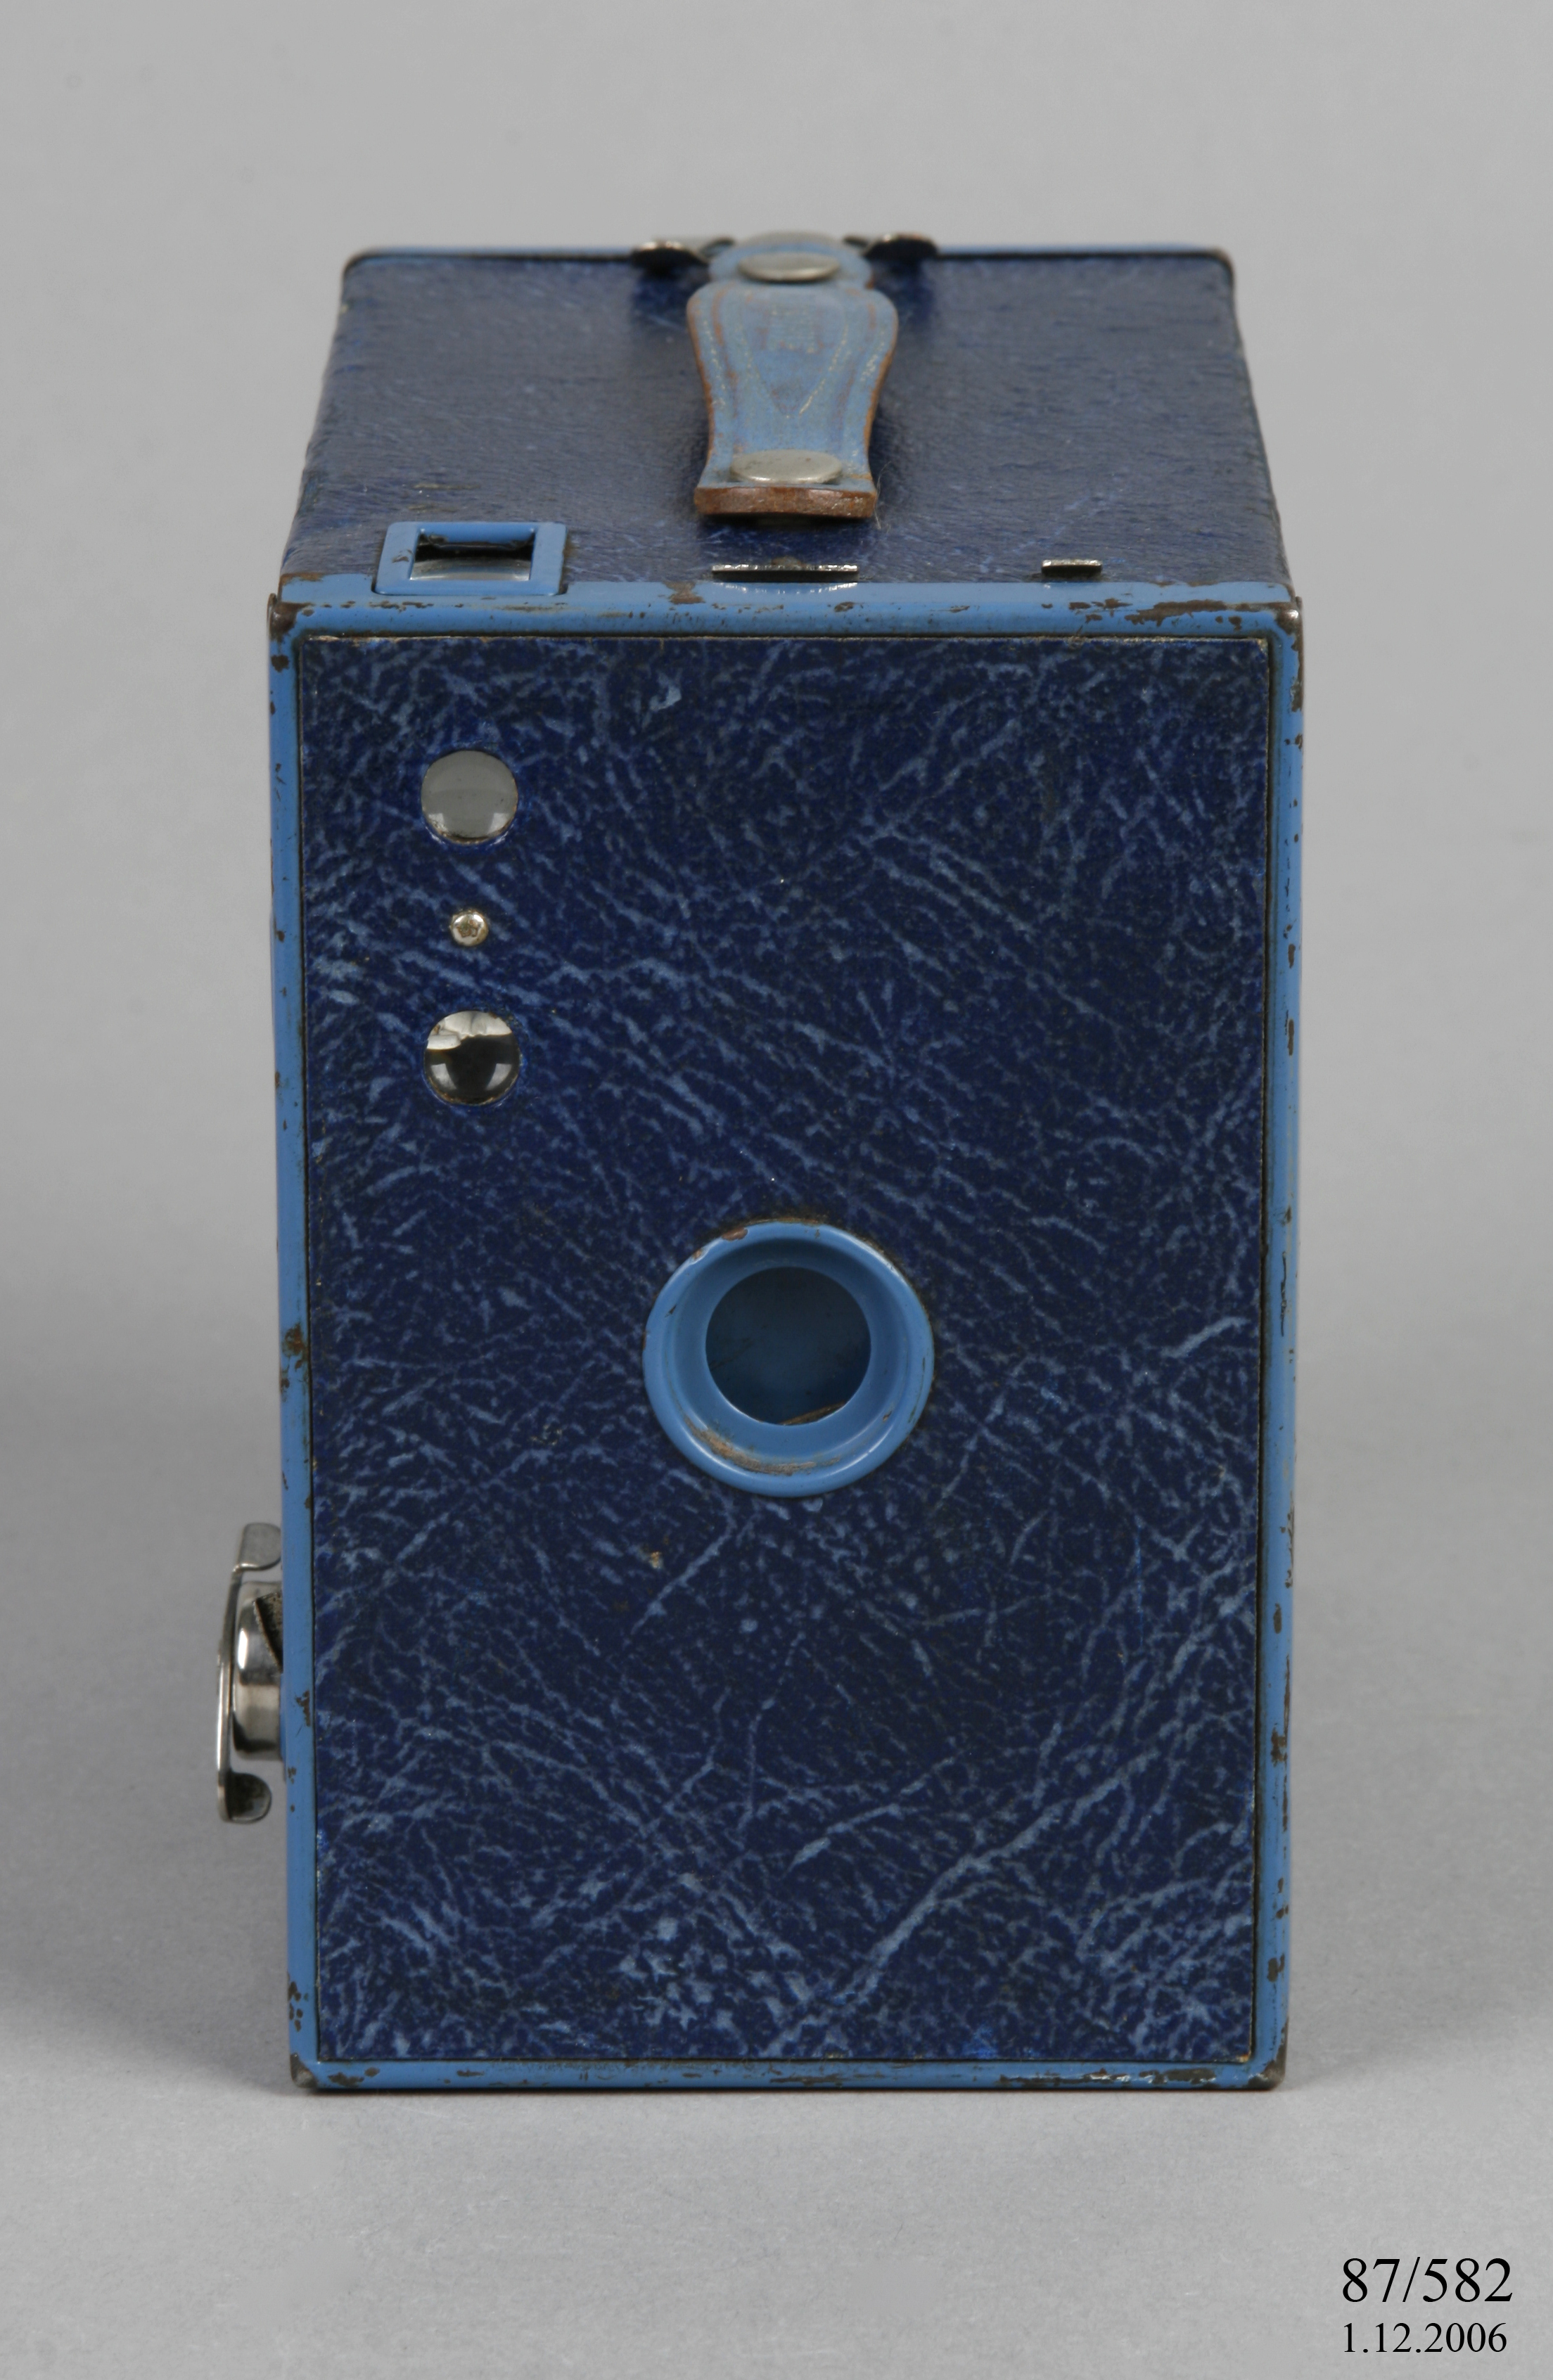 Eastman Kodak 'Brownie model No 2A' camera.